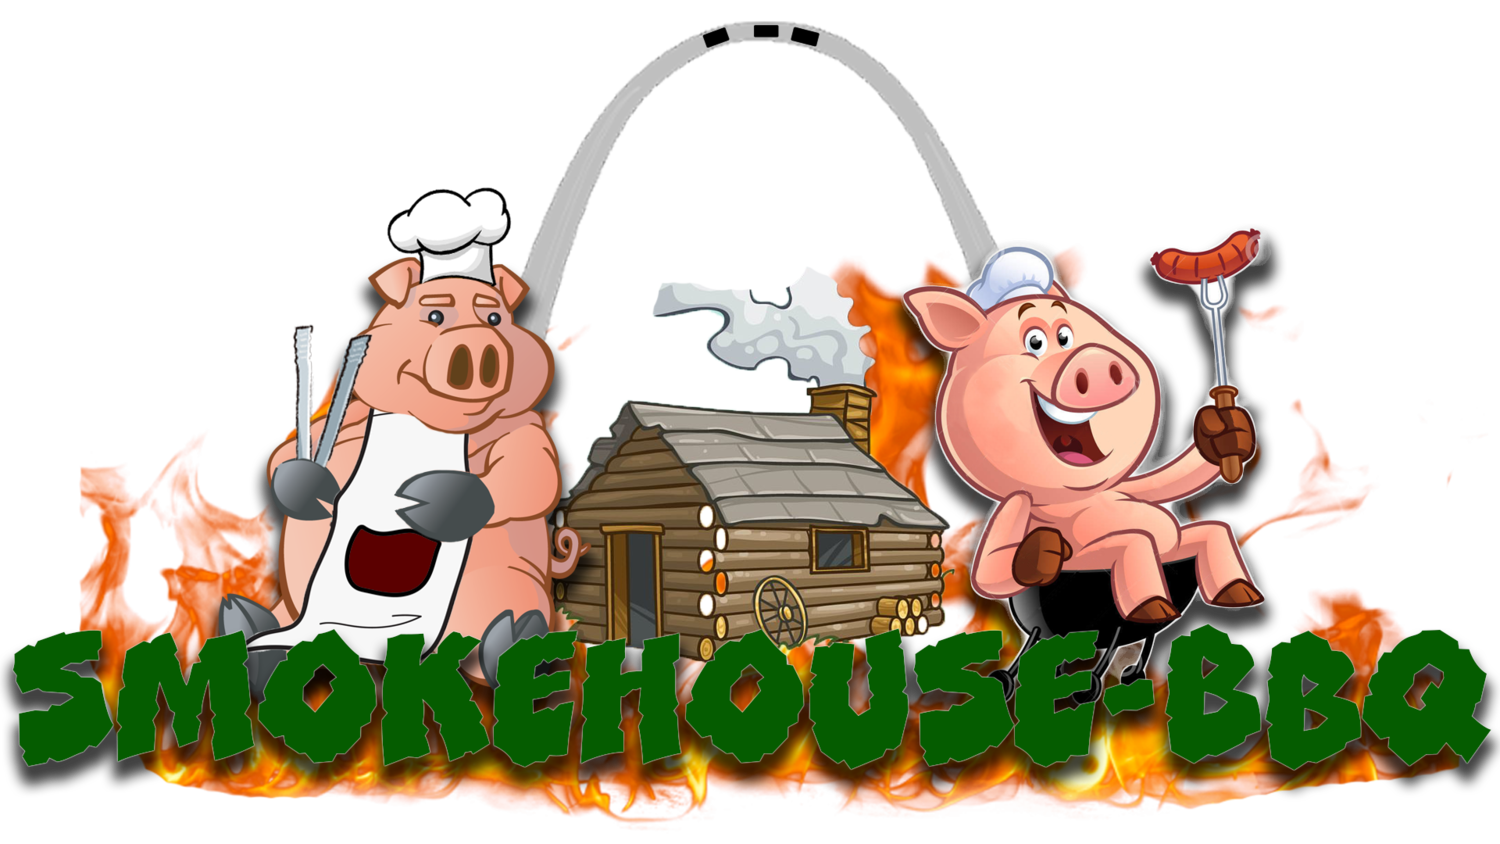 Smokehouse BBQ